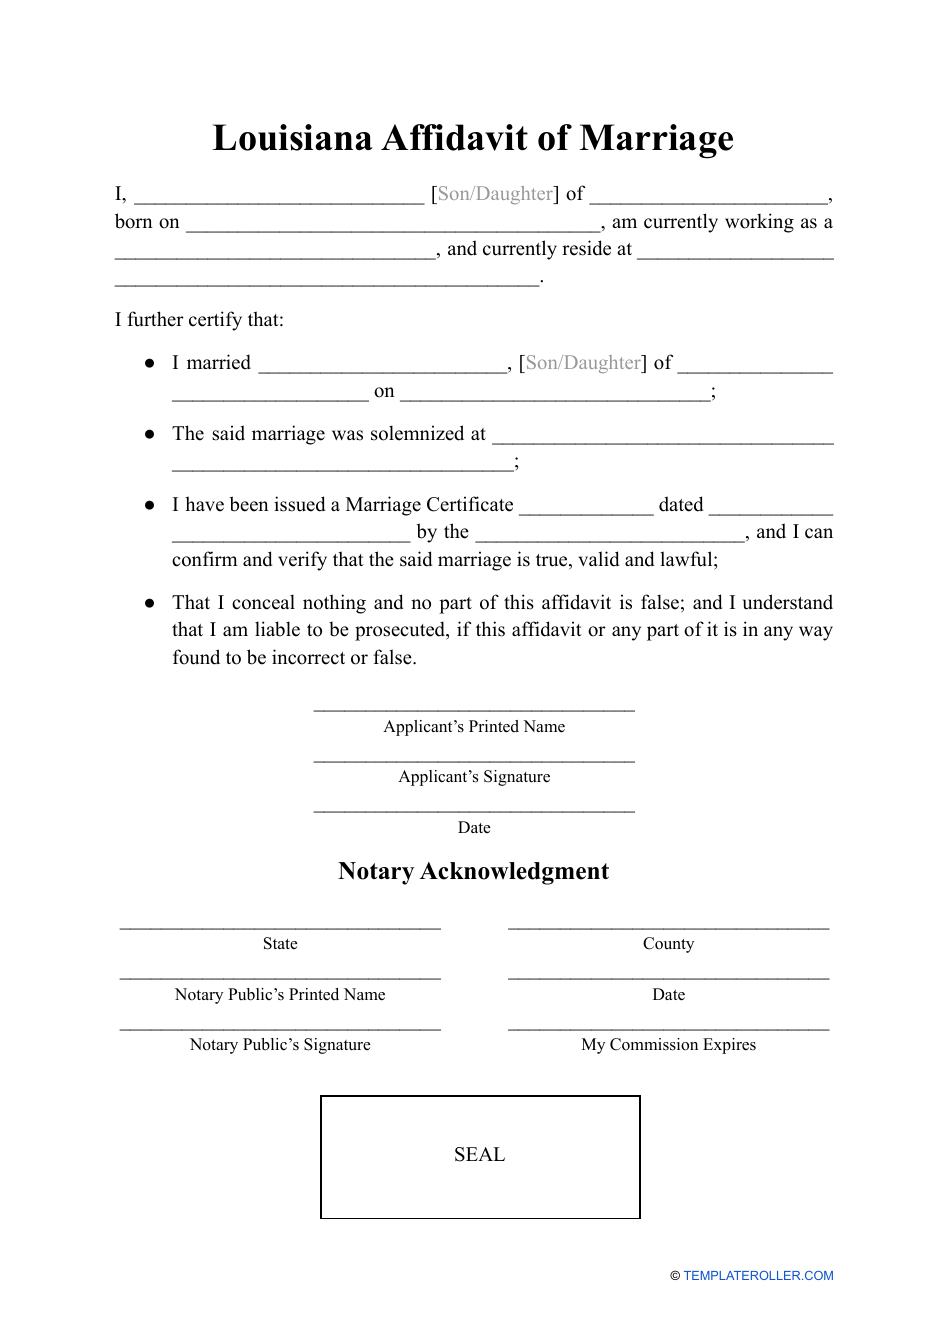 Affidavit of Marriage - Louisiana, Page 1